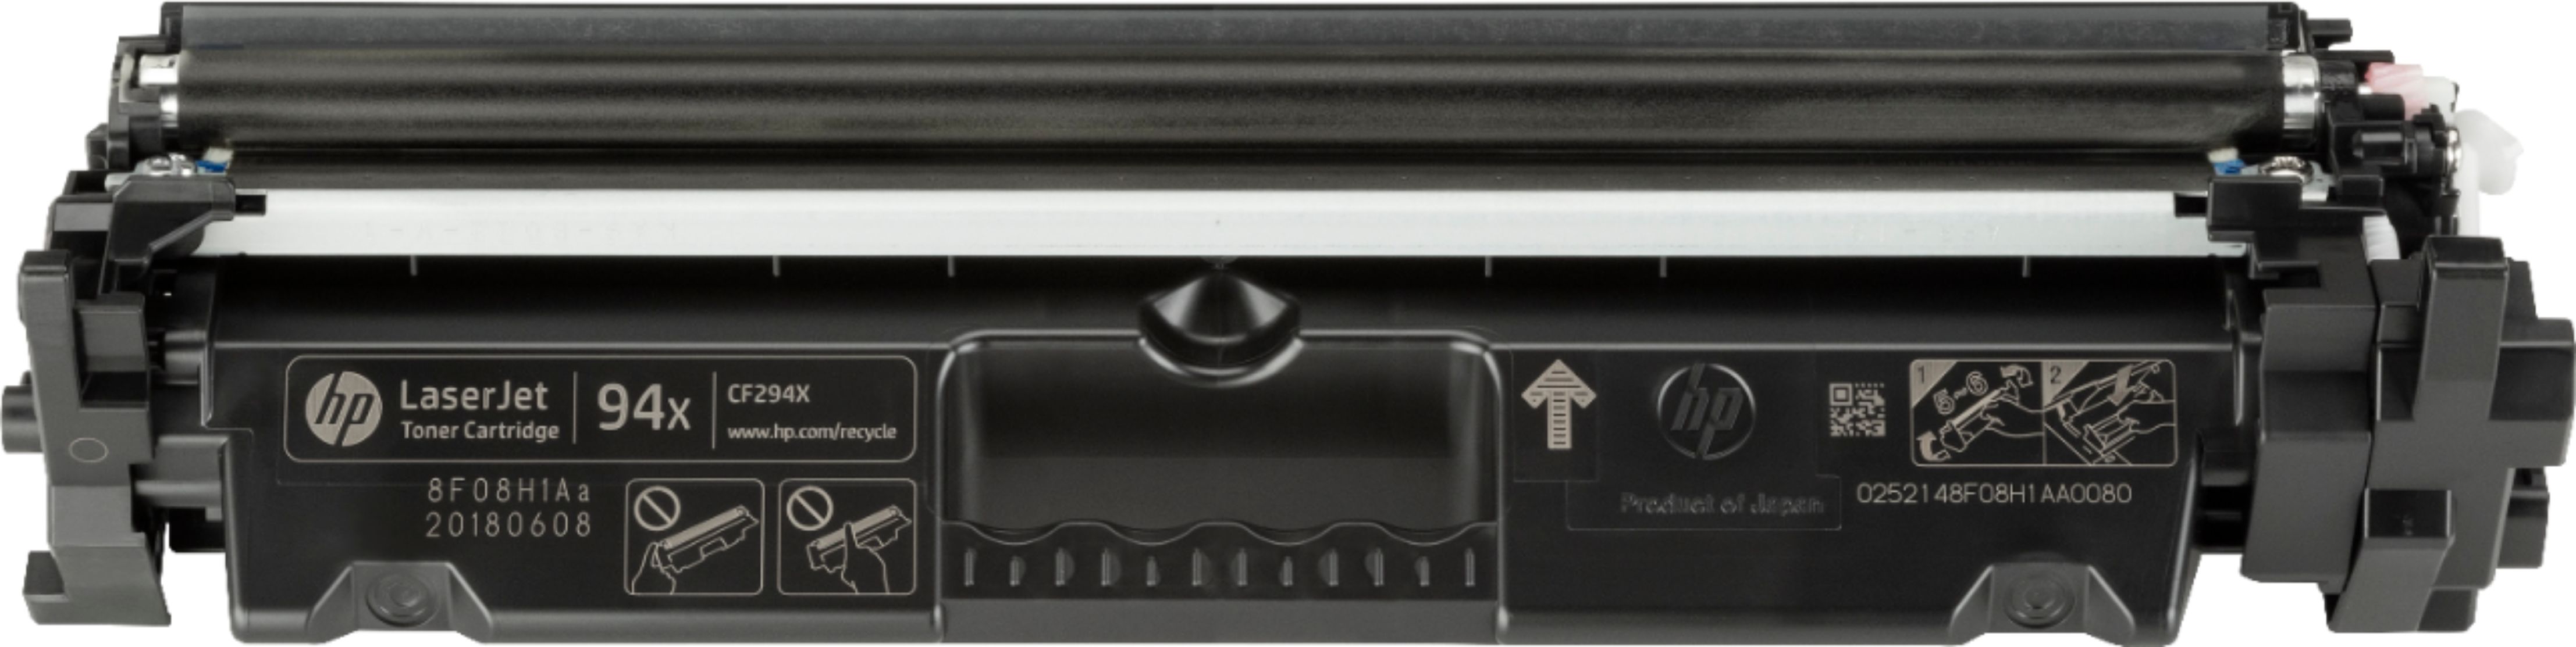 HP 94X (CF294X) Black High Yield Toner Cartridge for sale online